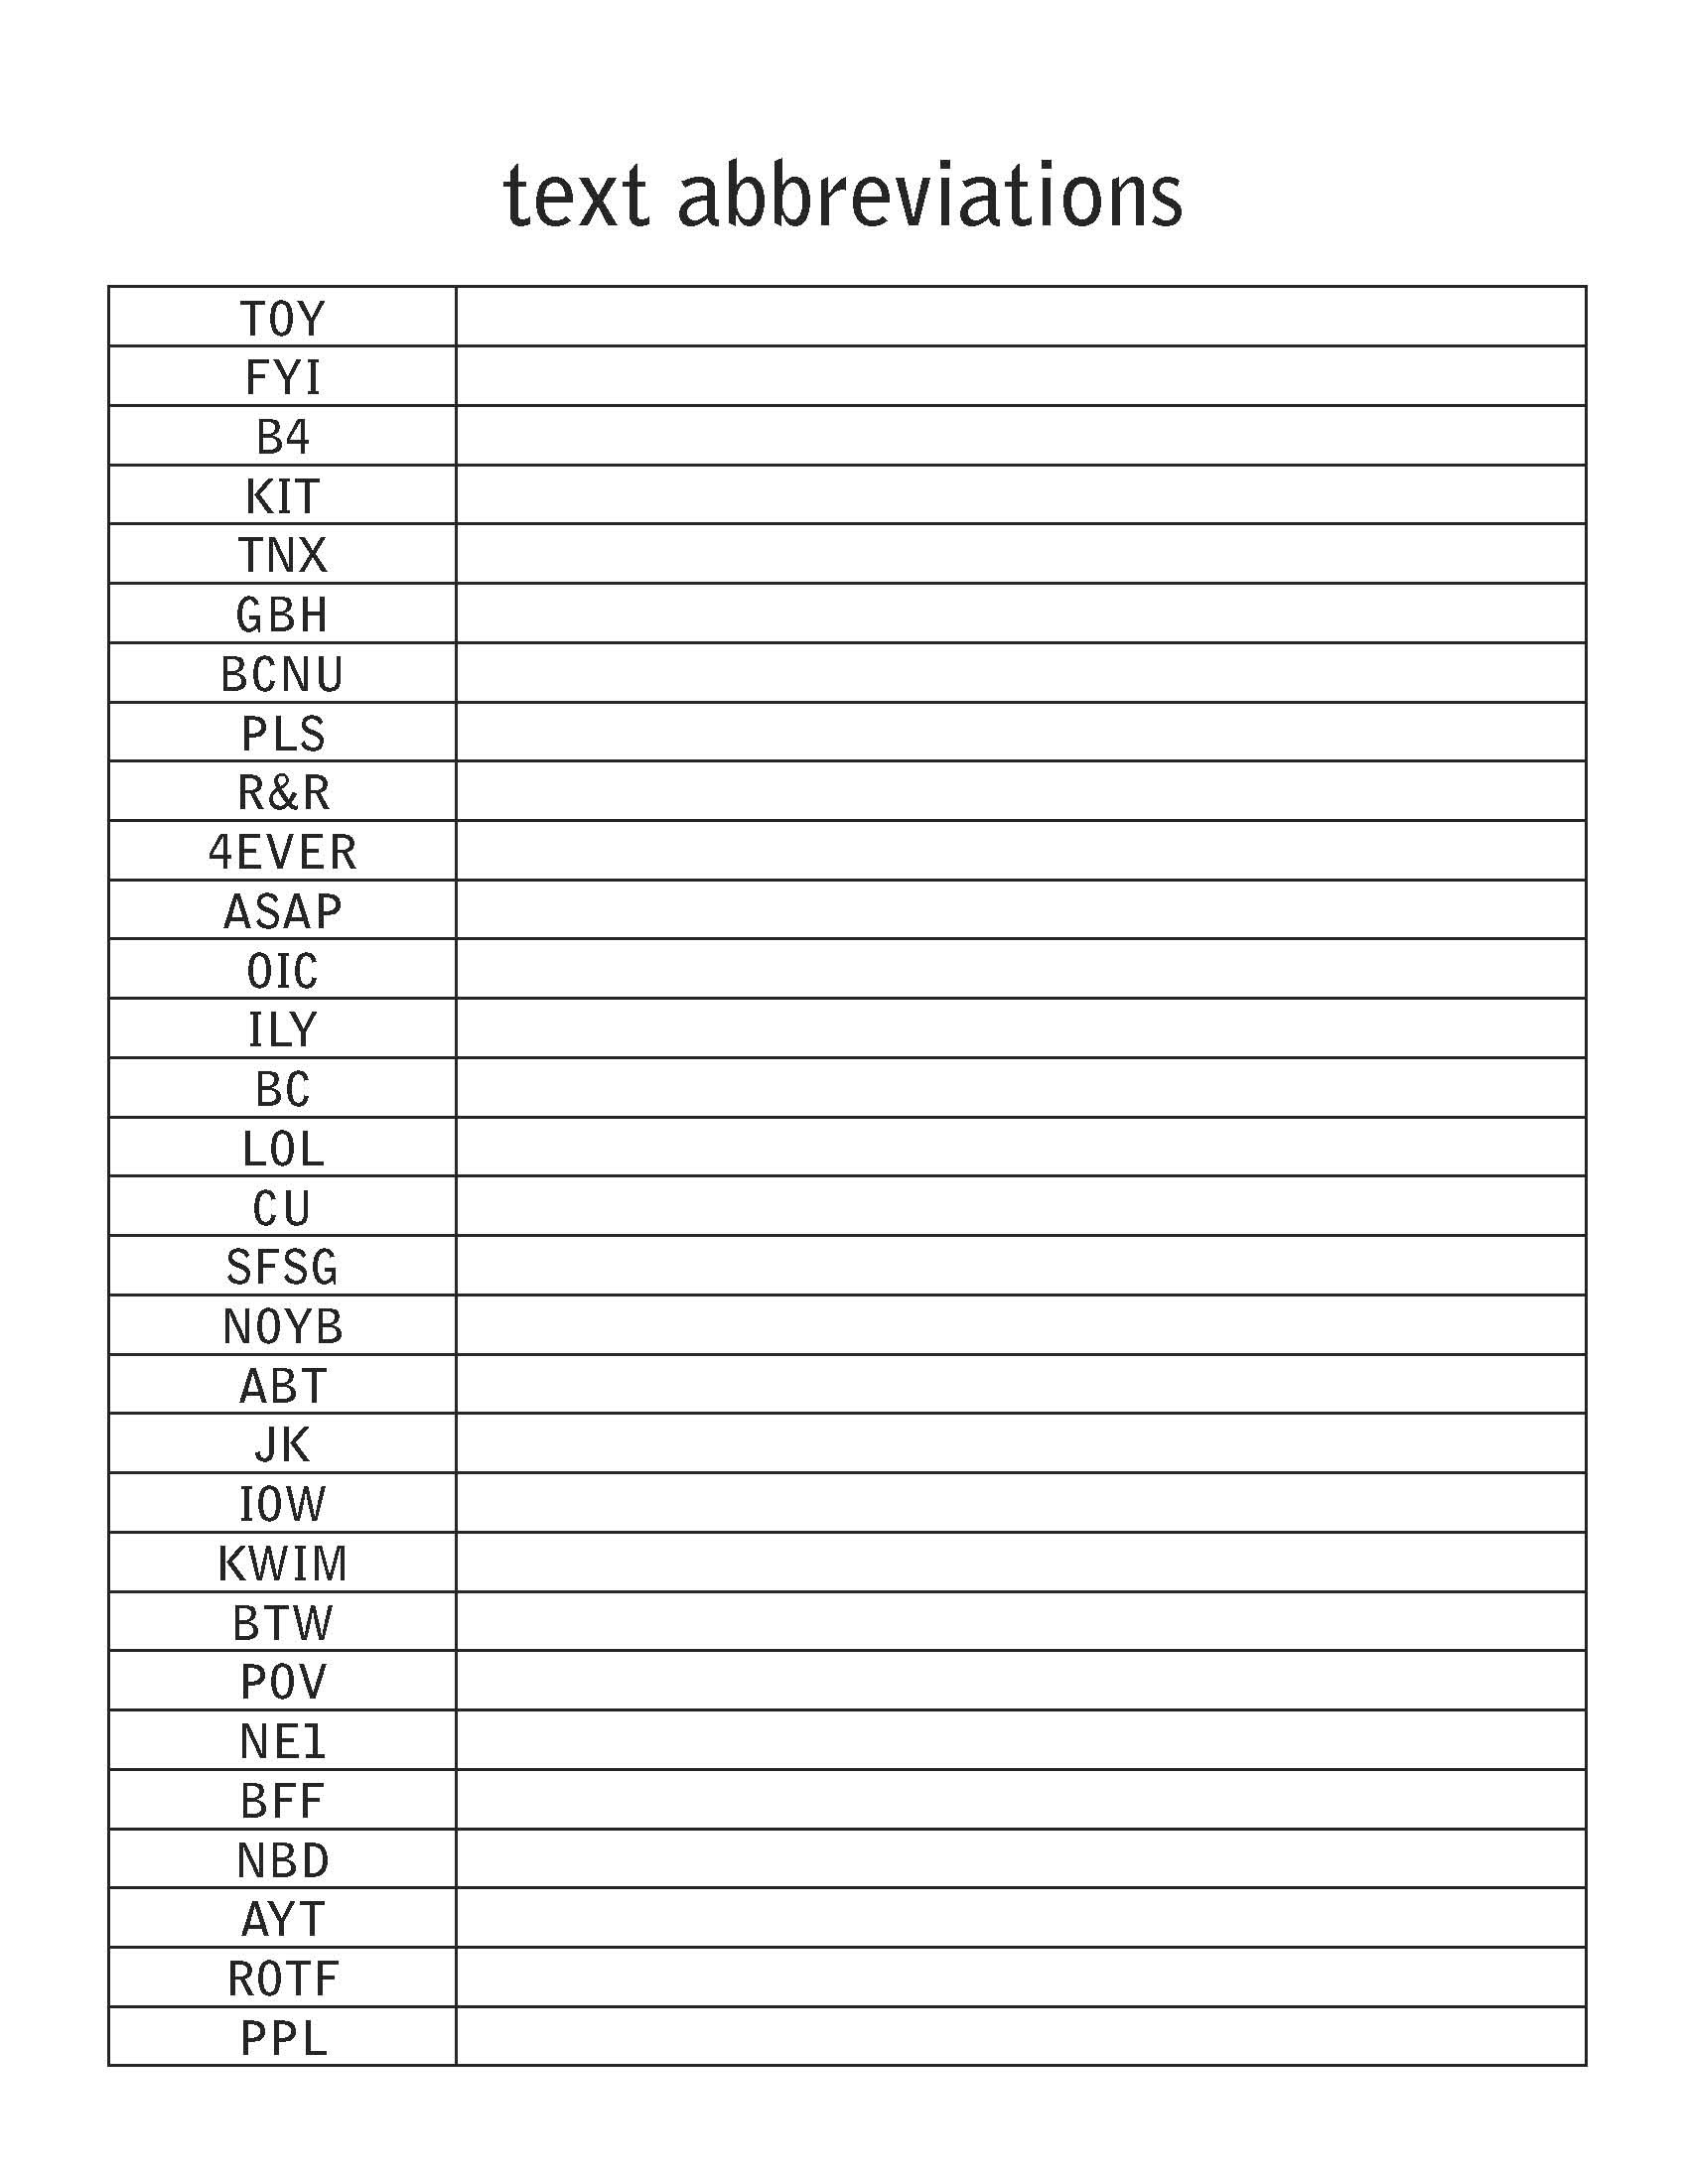 free-abbreviation-worksheets-and-printouts